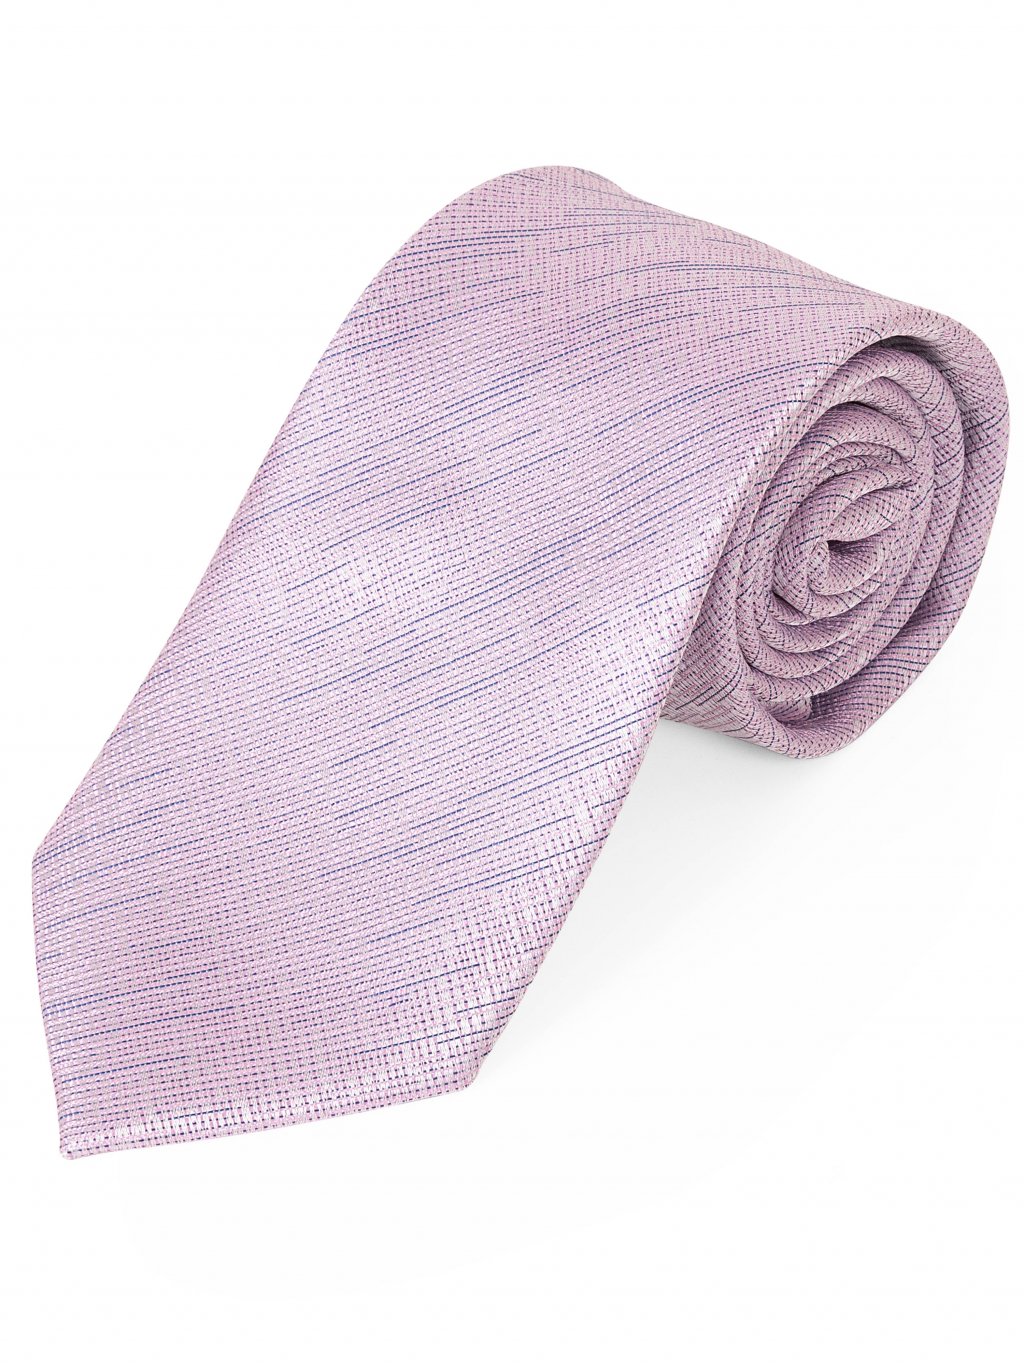 růžová kravata Feratt